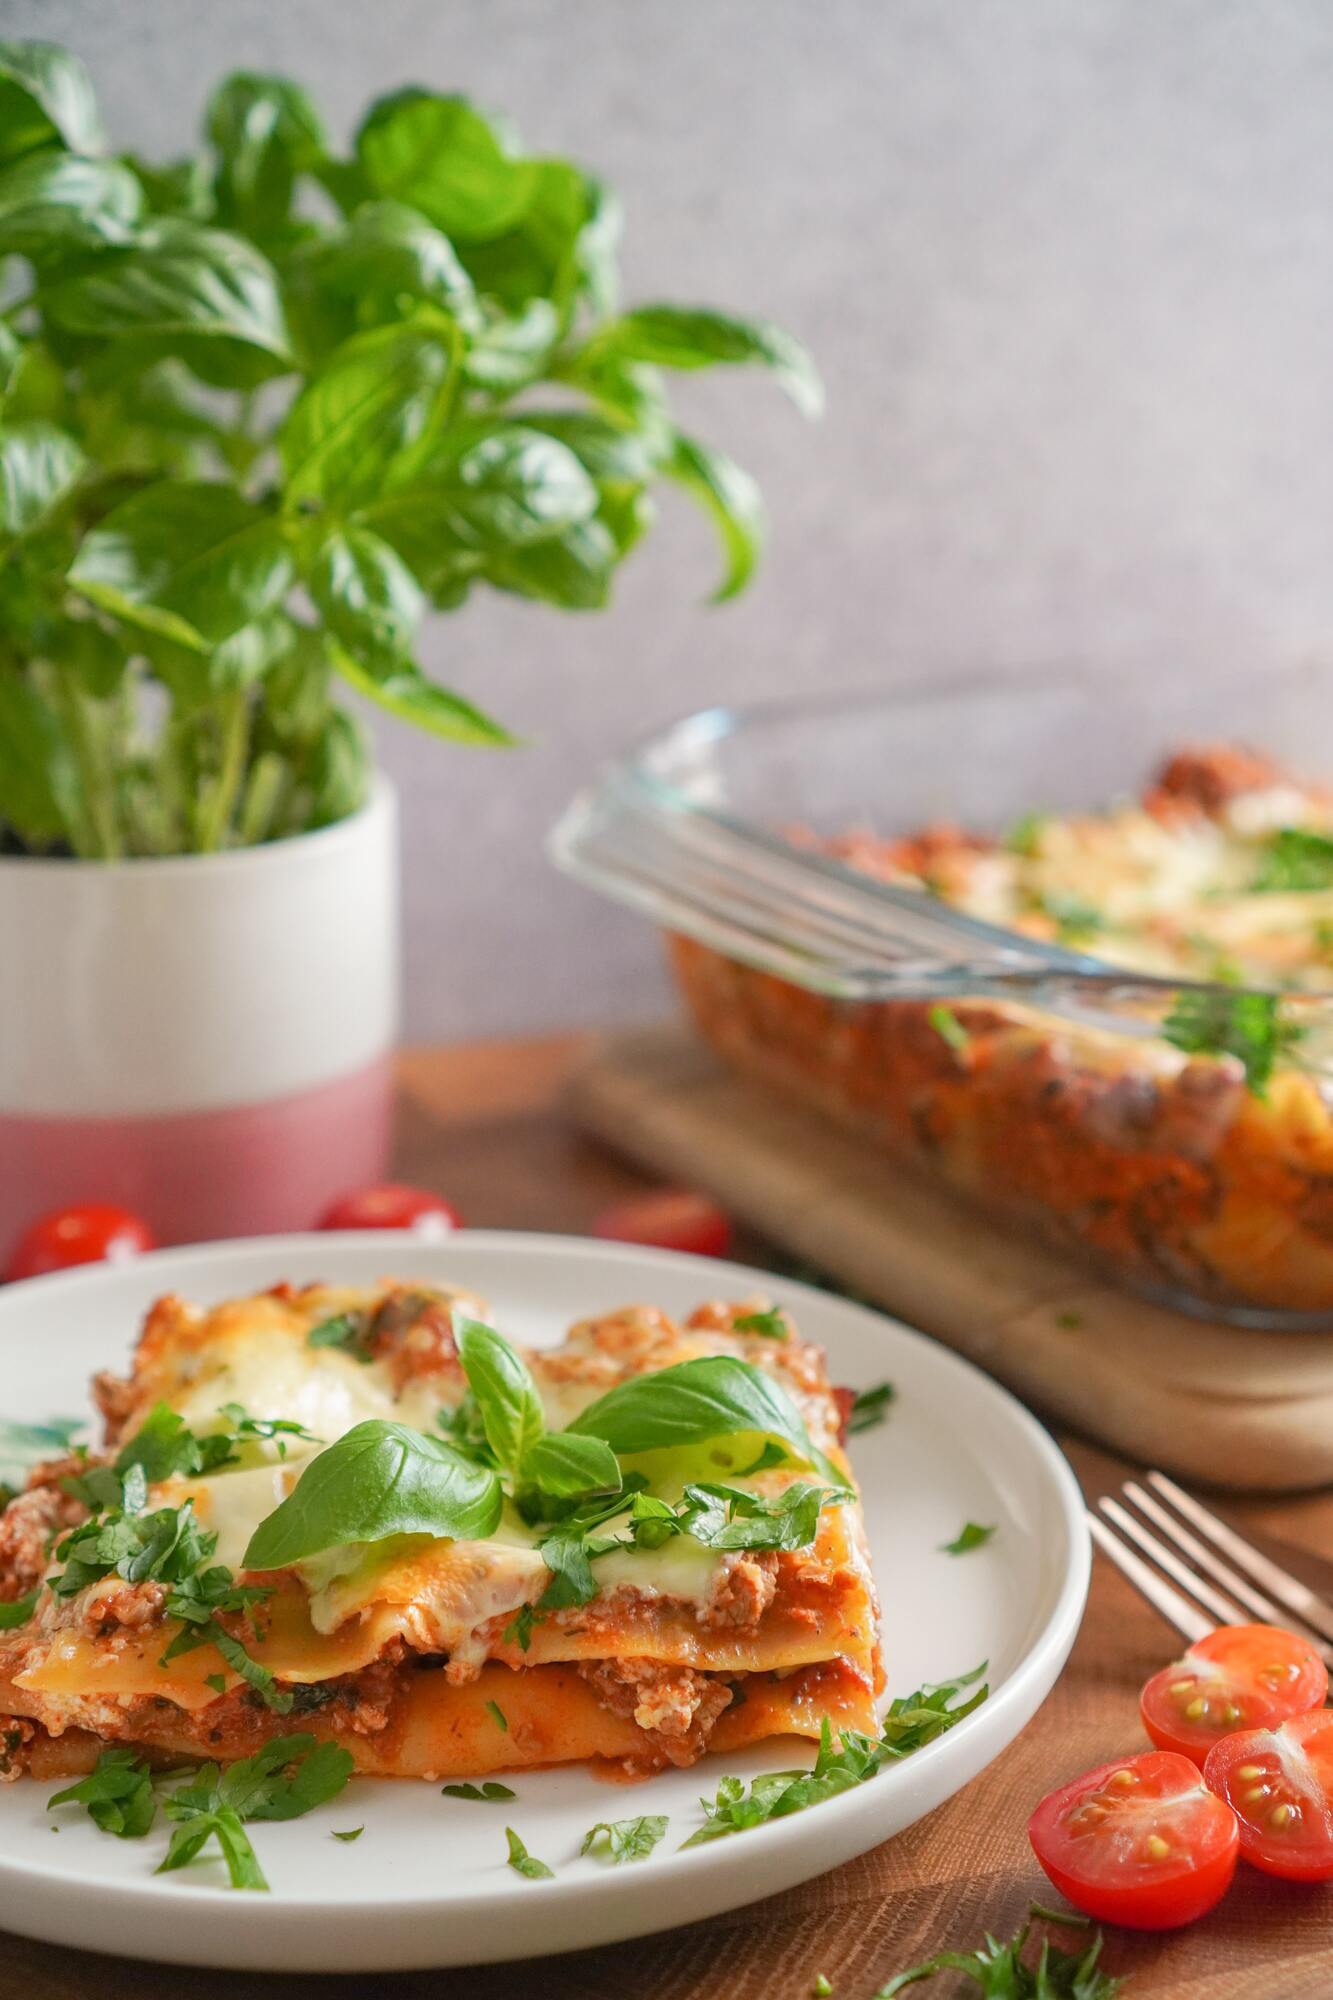 How to cook a delicious lasagna